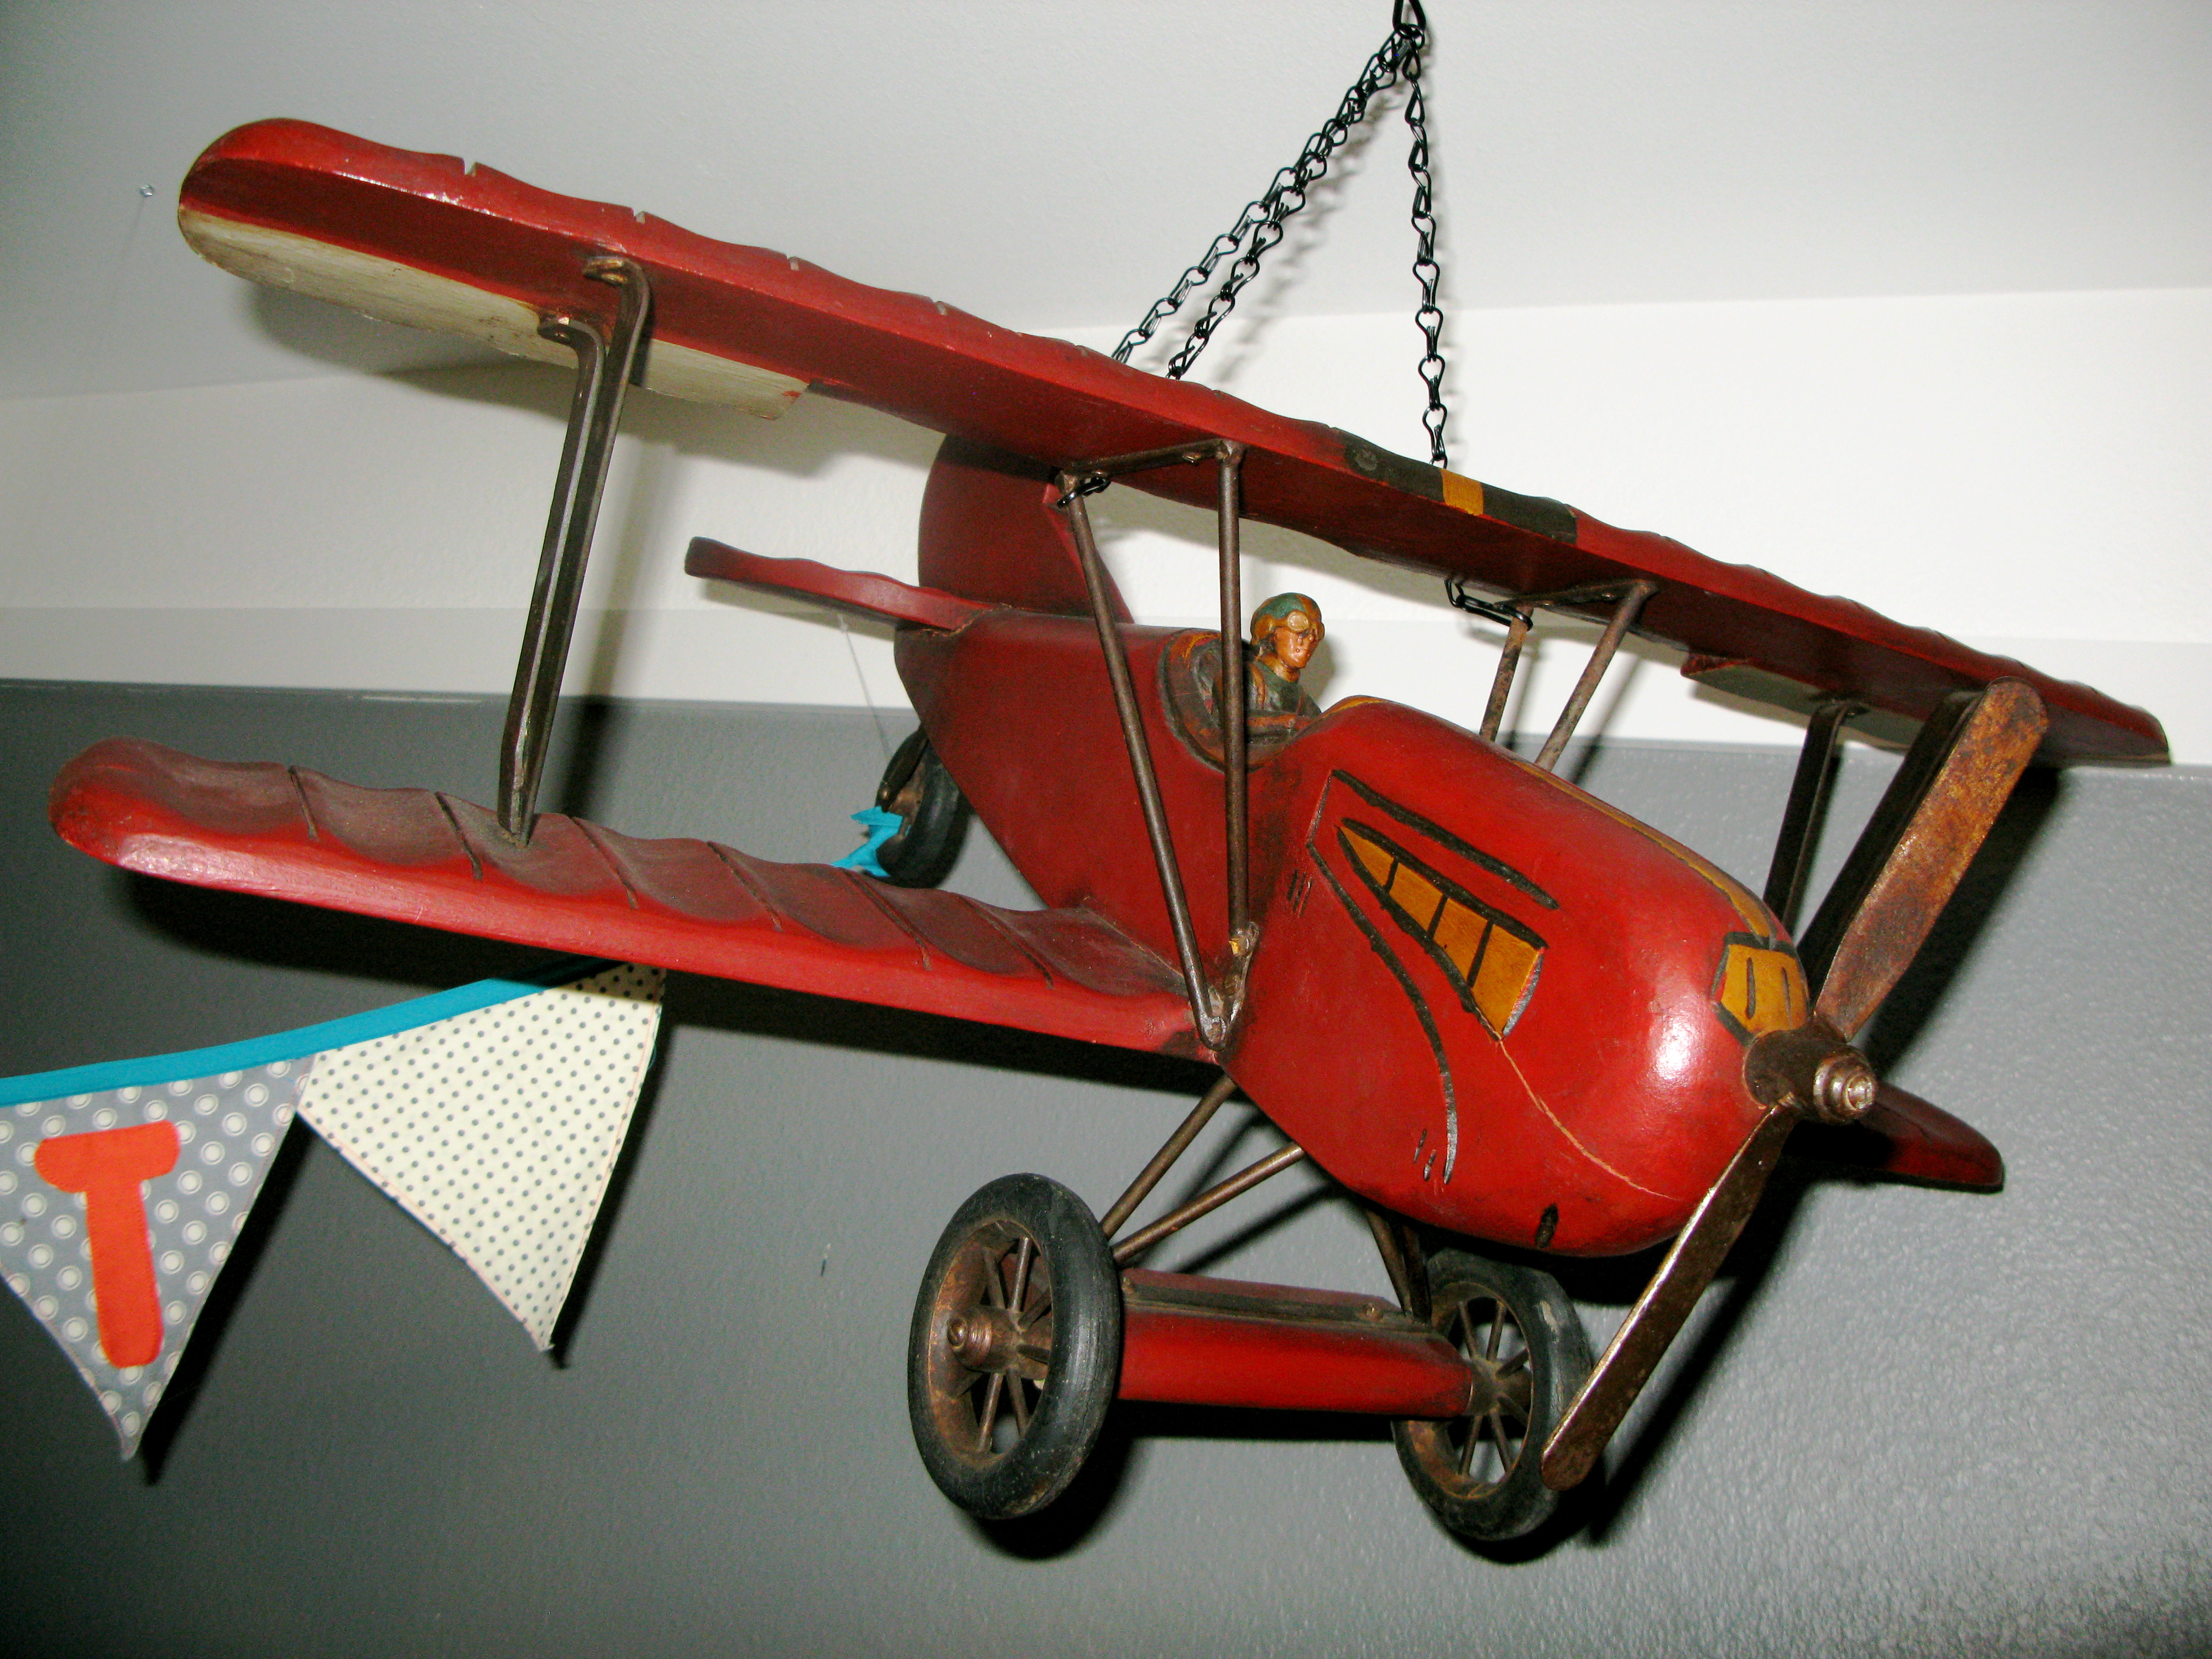 Hanging Vintage Airplane